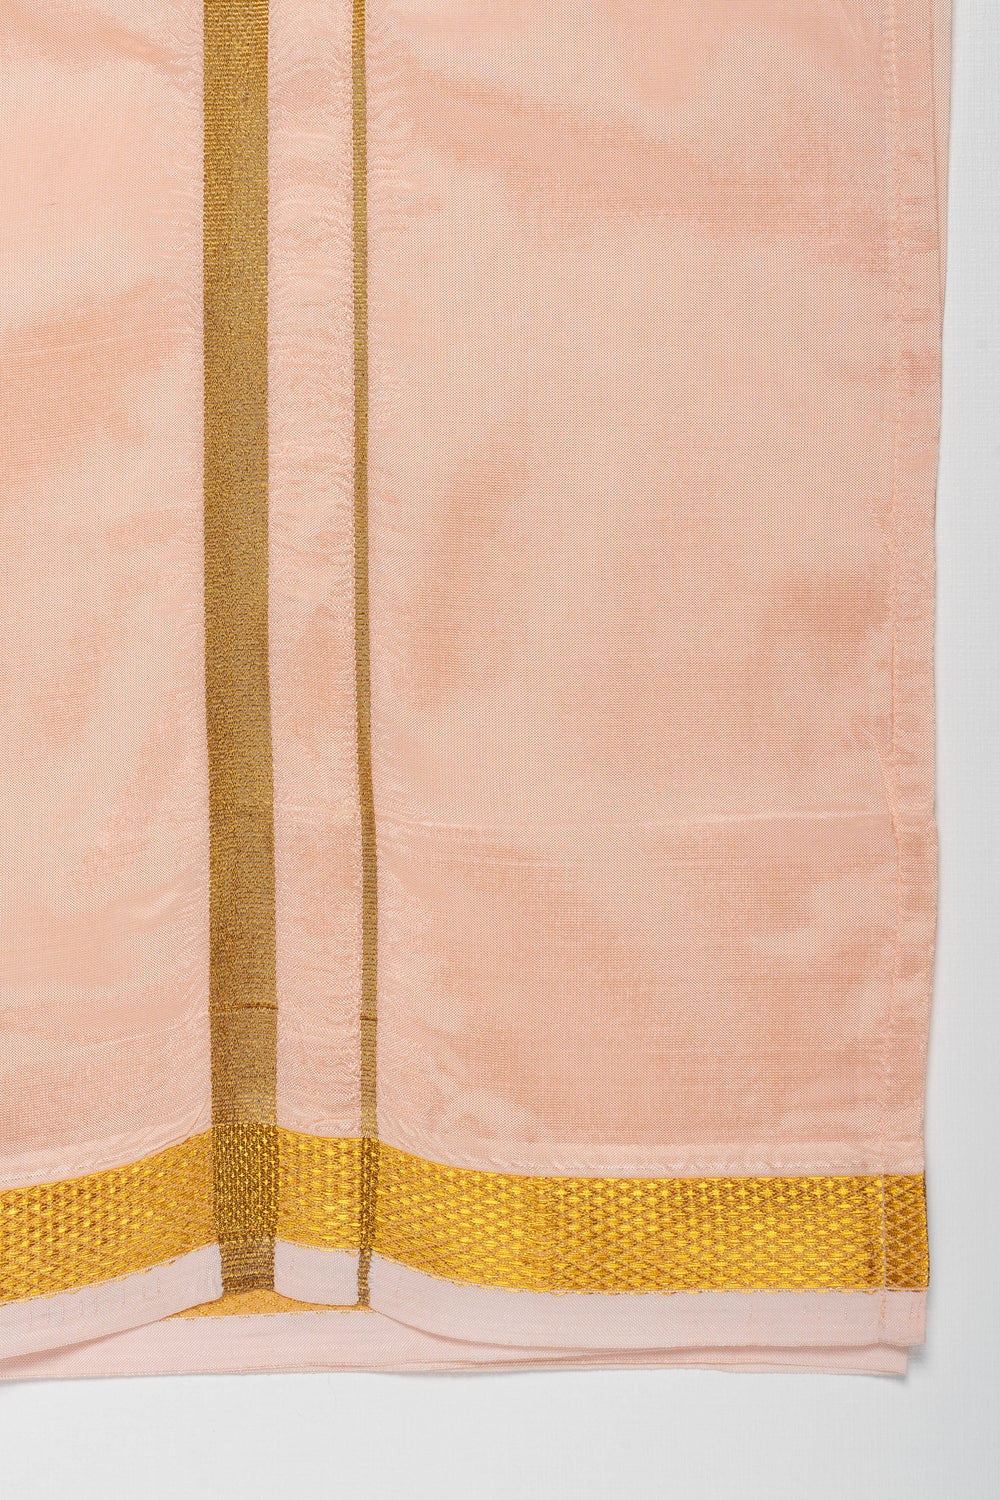 The Nesavu Boys Vesti Boys Soft Silk Dhoti in Delicate Pink with Golden Trim Nesavu Buy Boys Pink Silk Dhoti with Golden Stripes | Traditional Ethnic Wear | The Nesavu